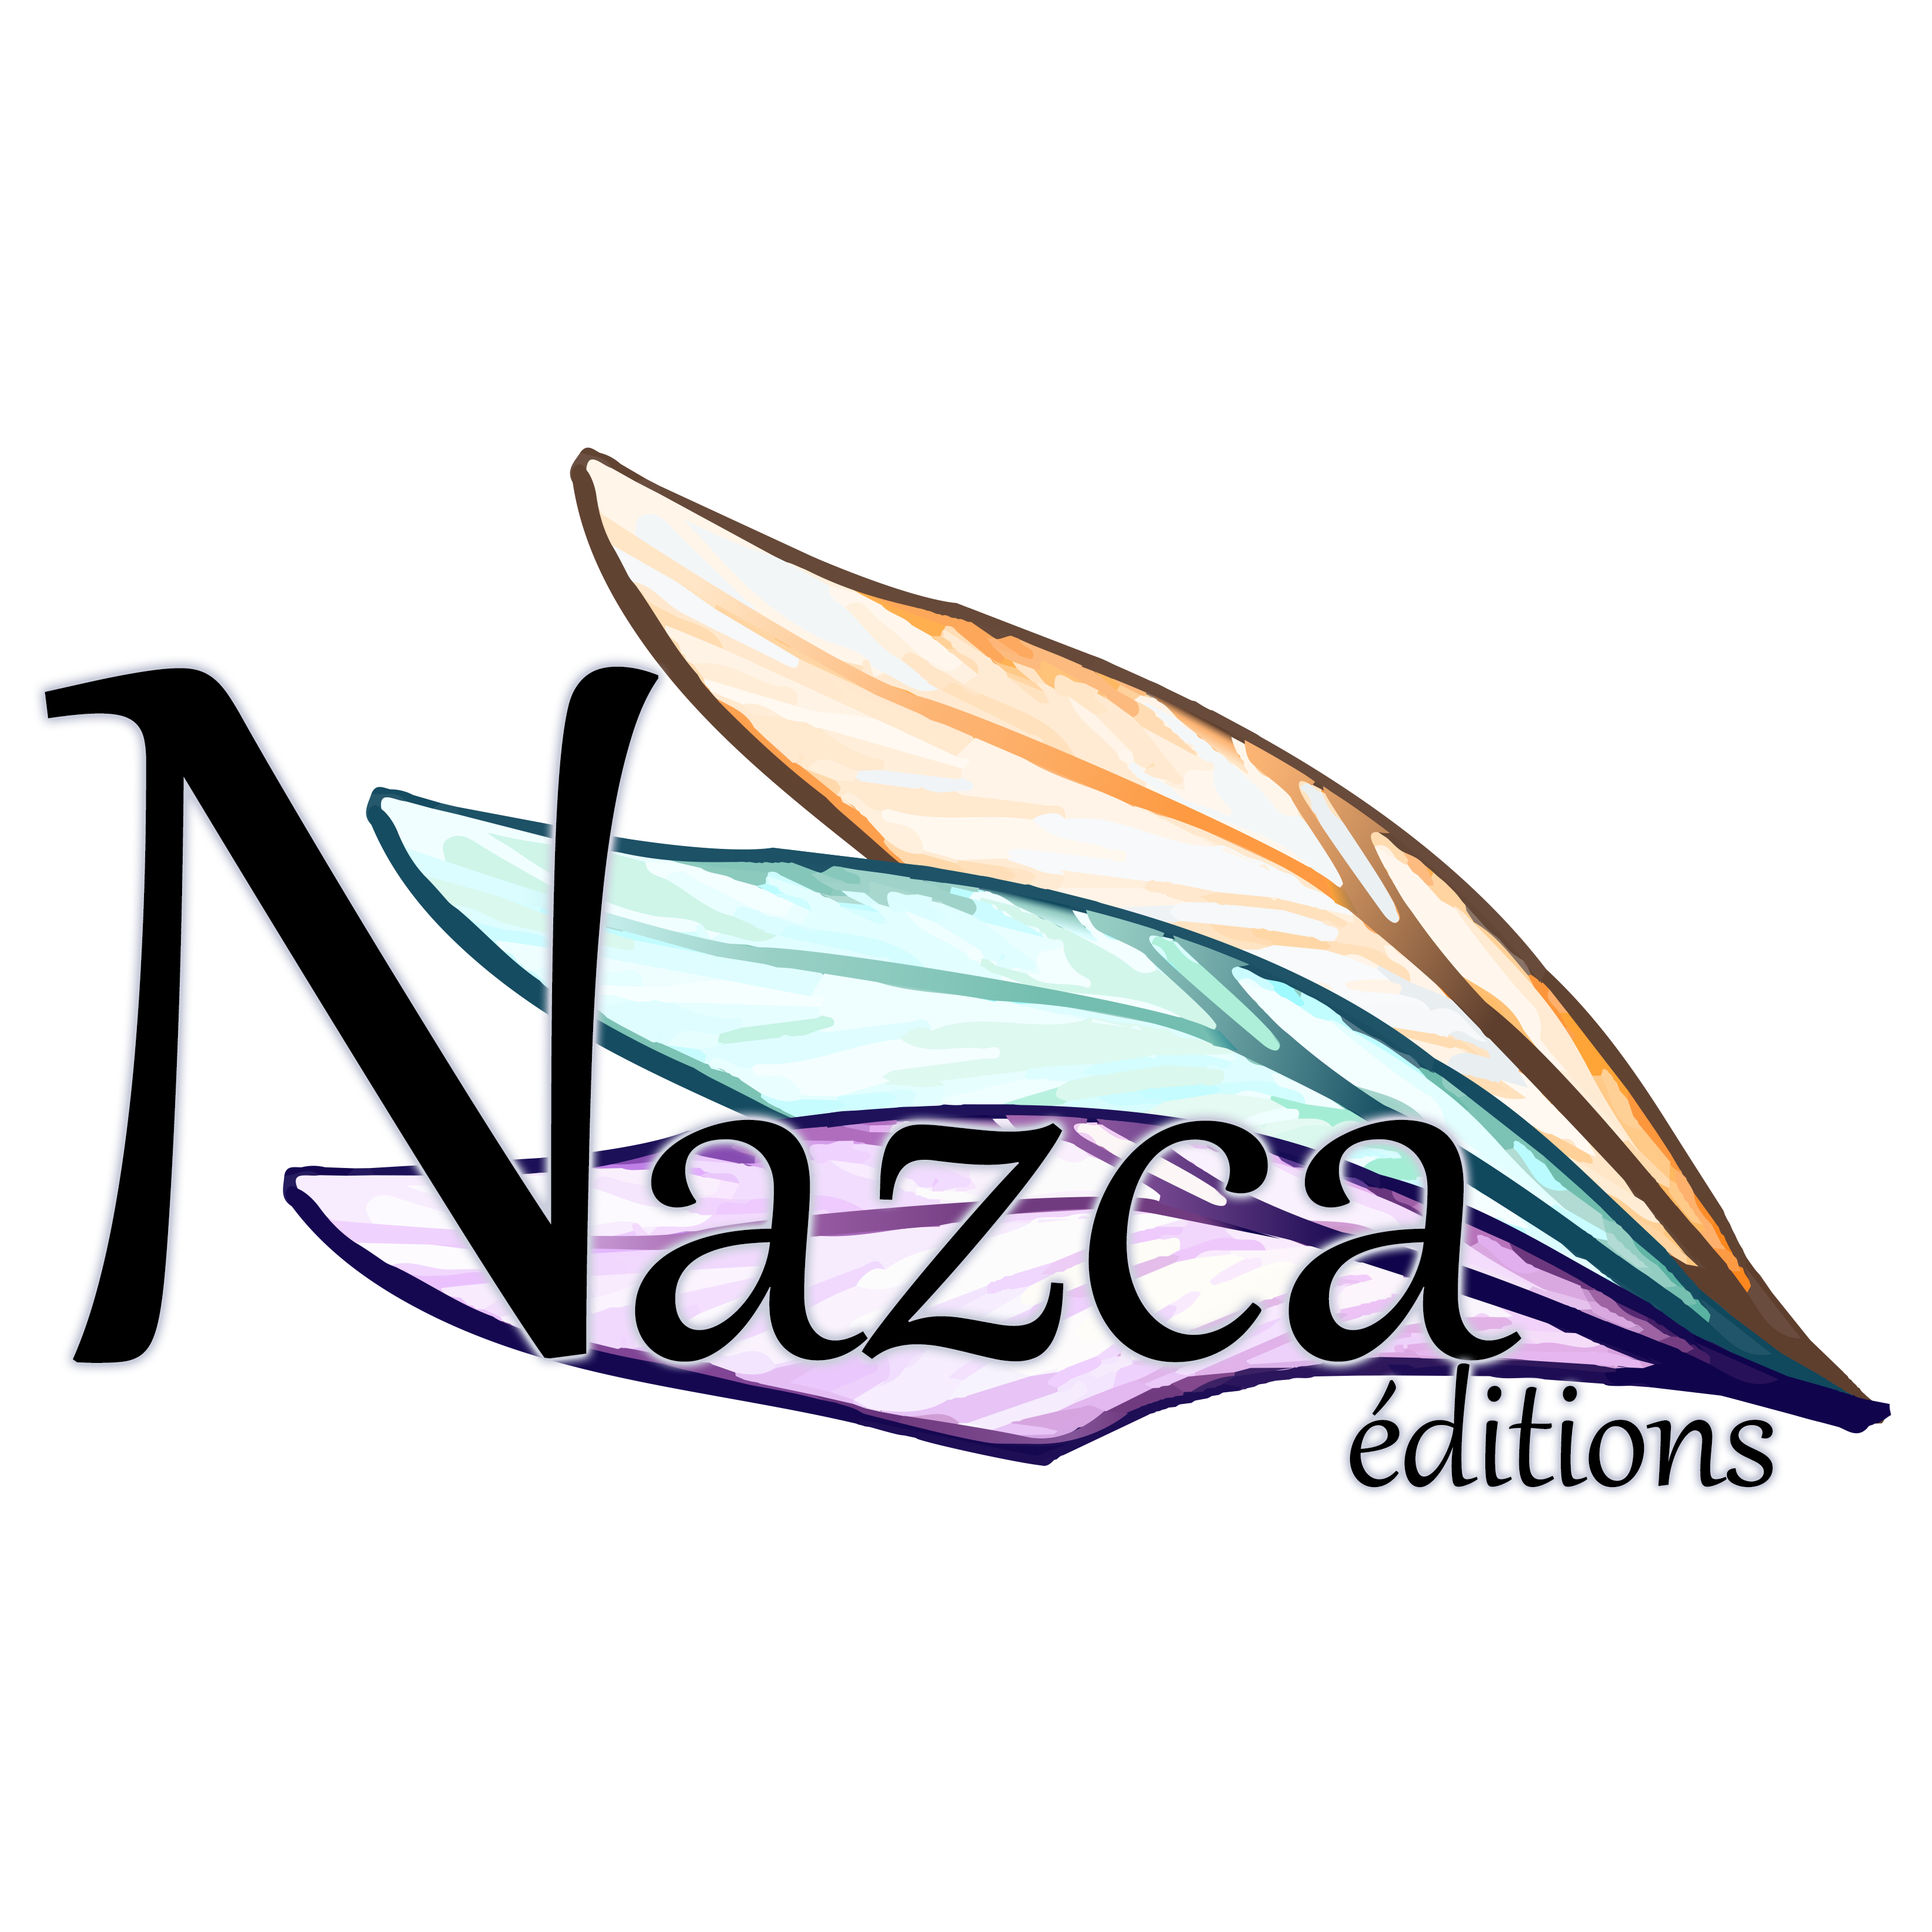 Nazca Éditions